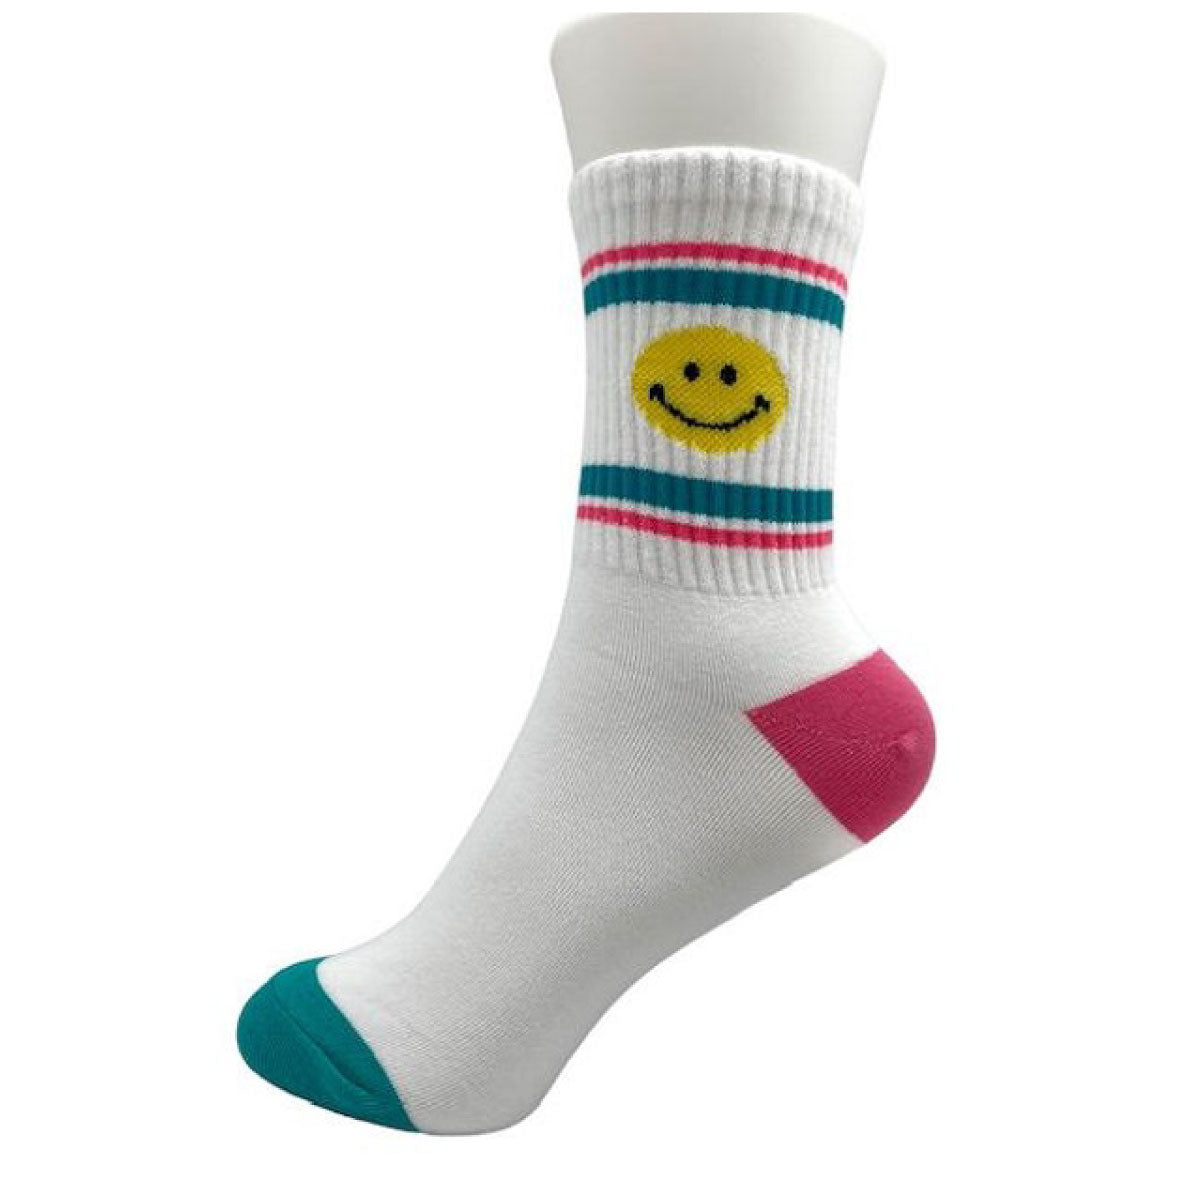 Retro Smiley Half Crew Socks